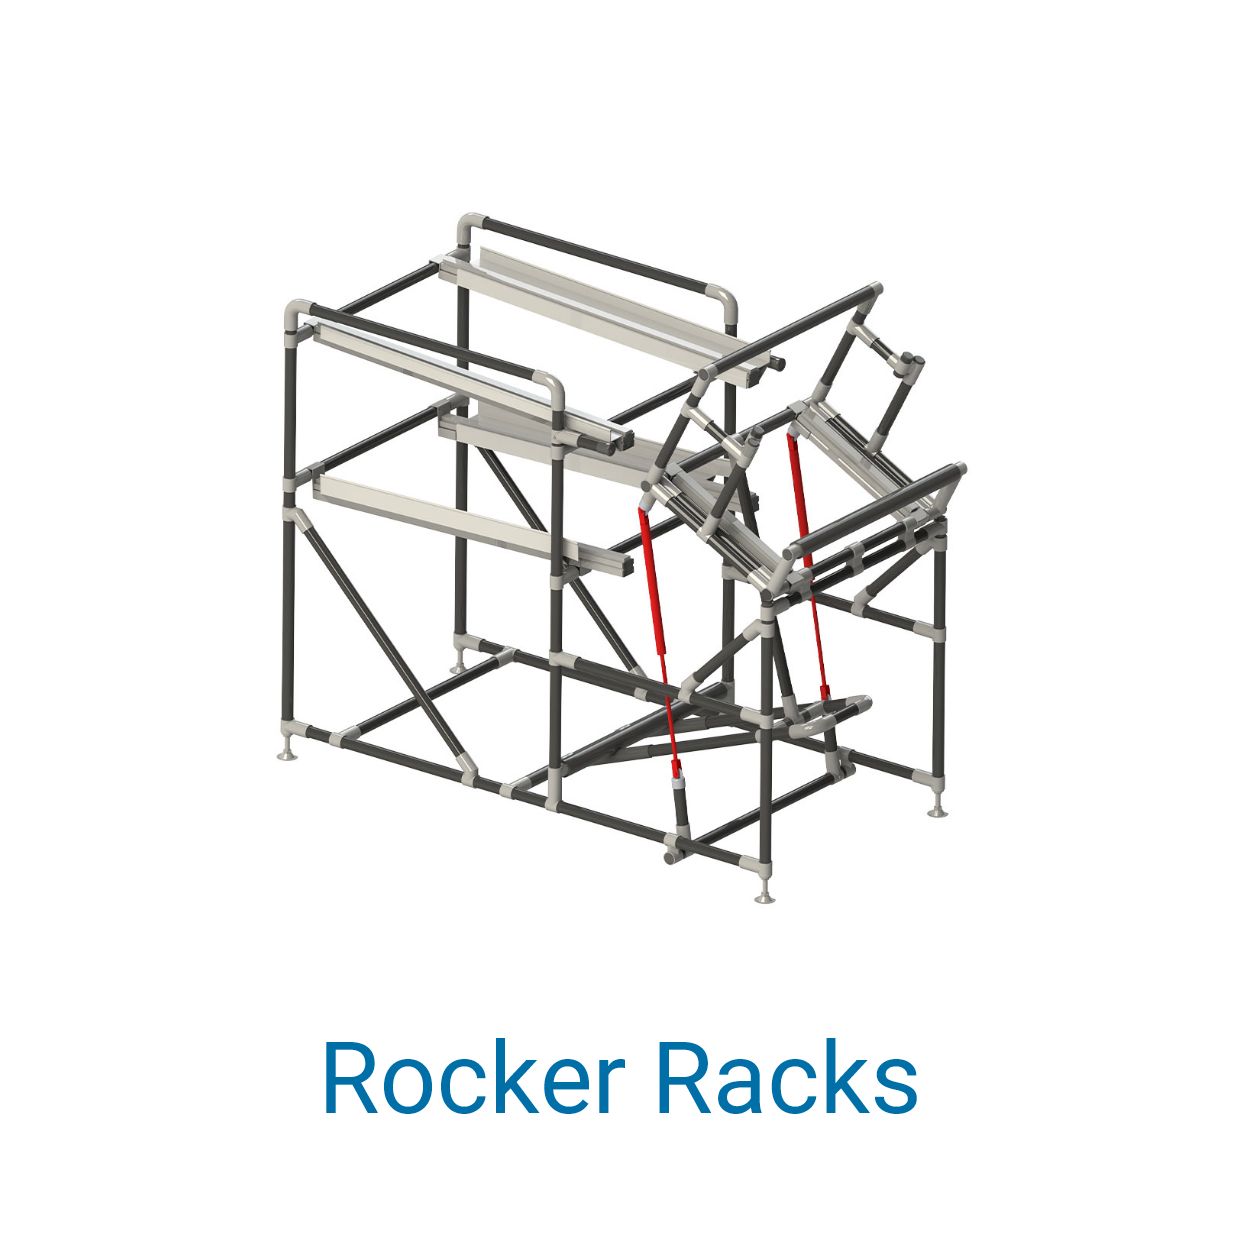 Rendering of a rocker rack from BeeWaTec 